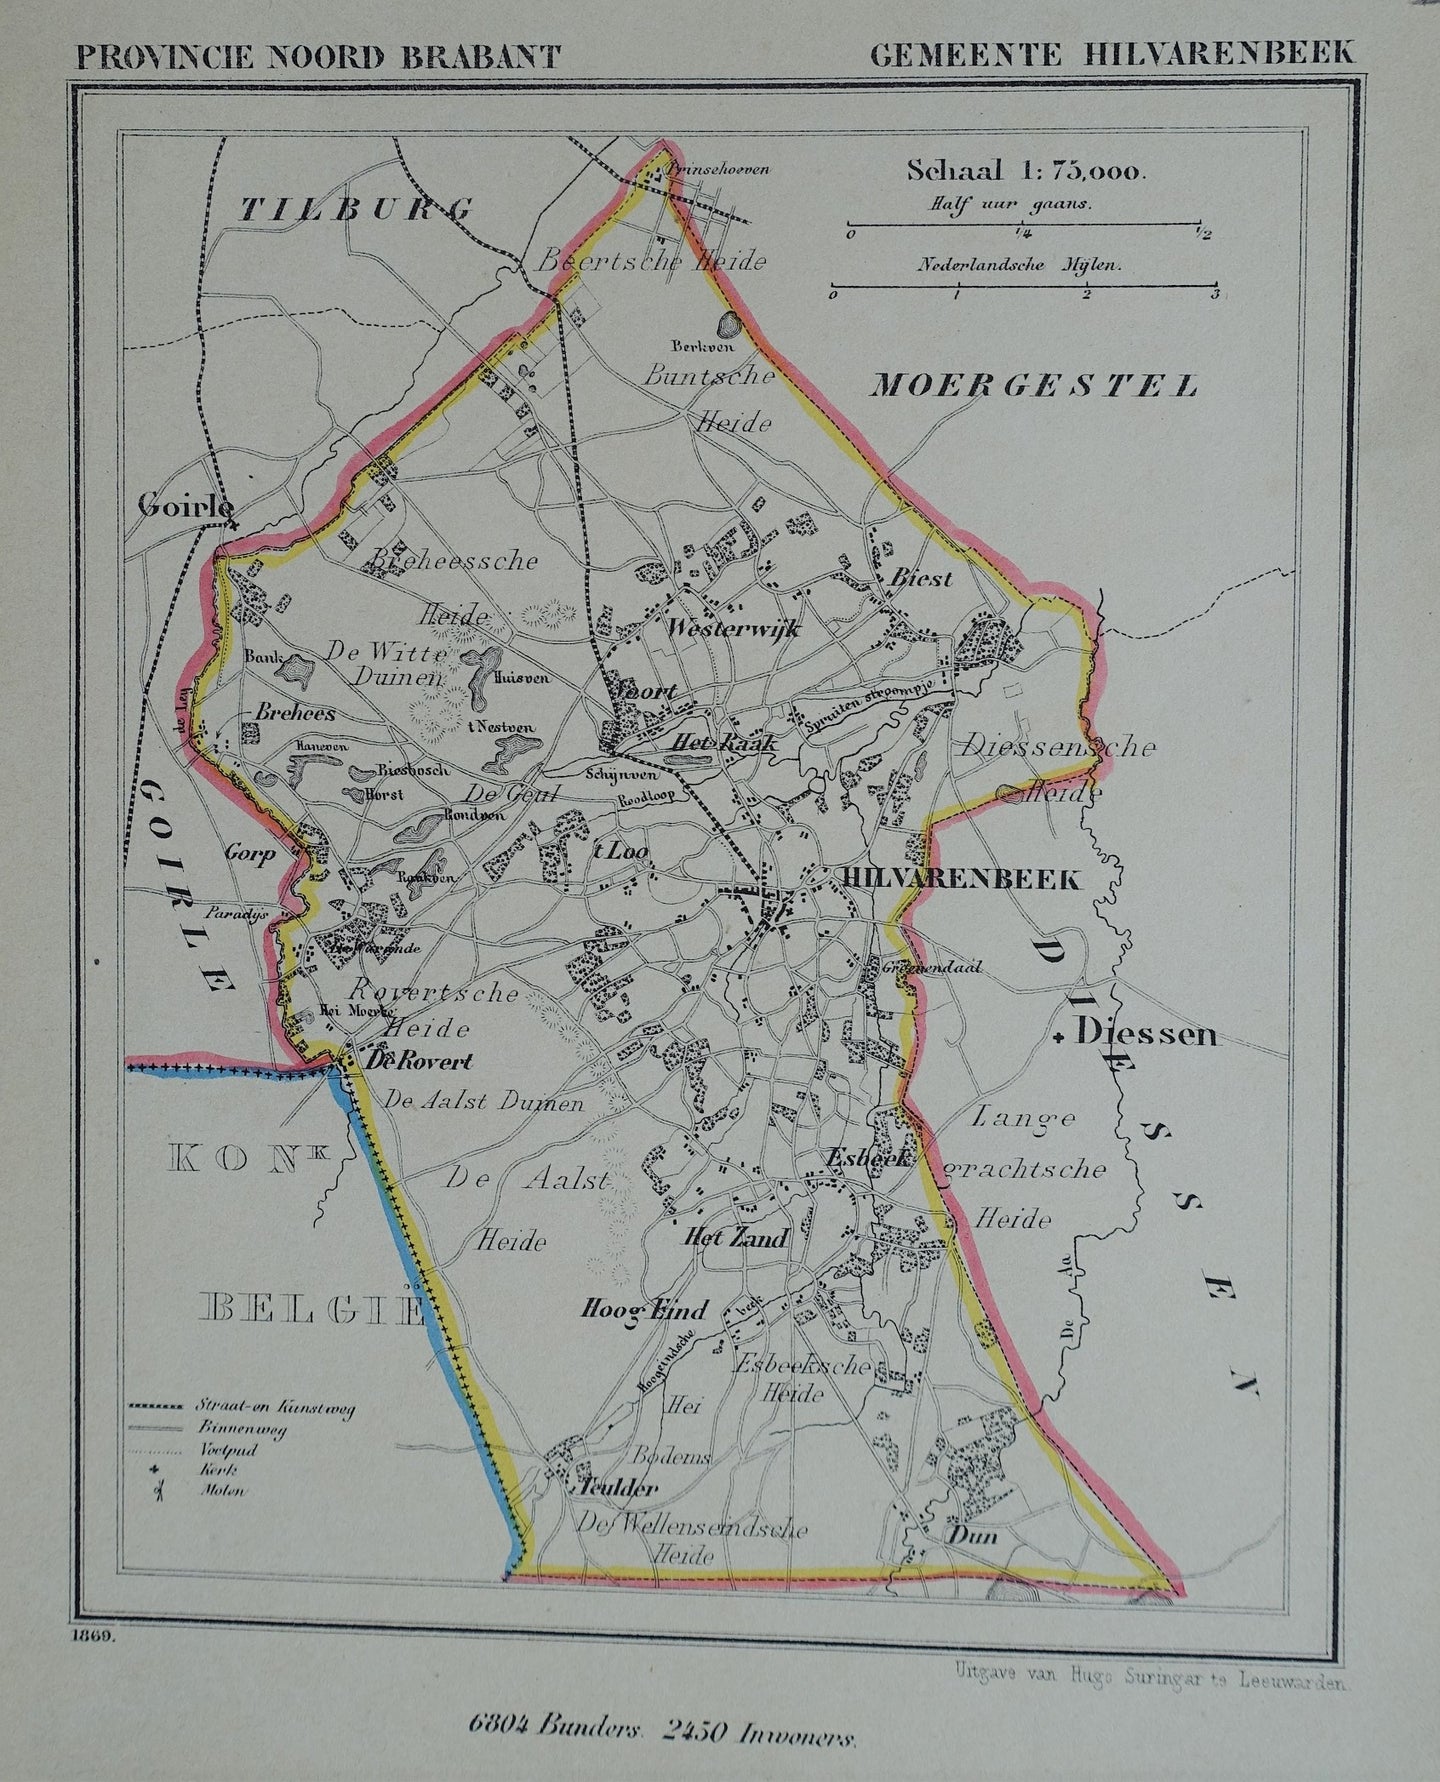 Hilvarenbeek - J Kuijper / H Suringar - 1869